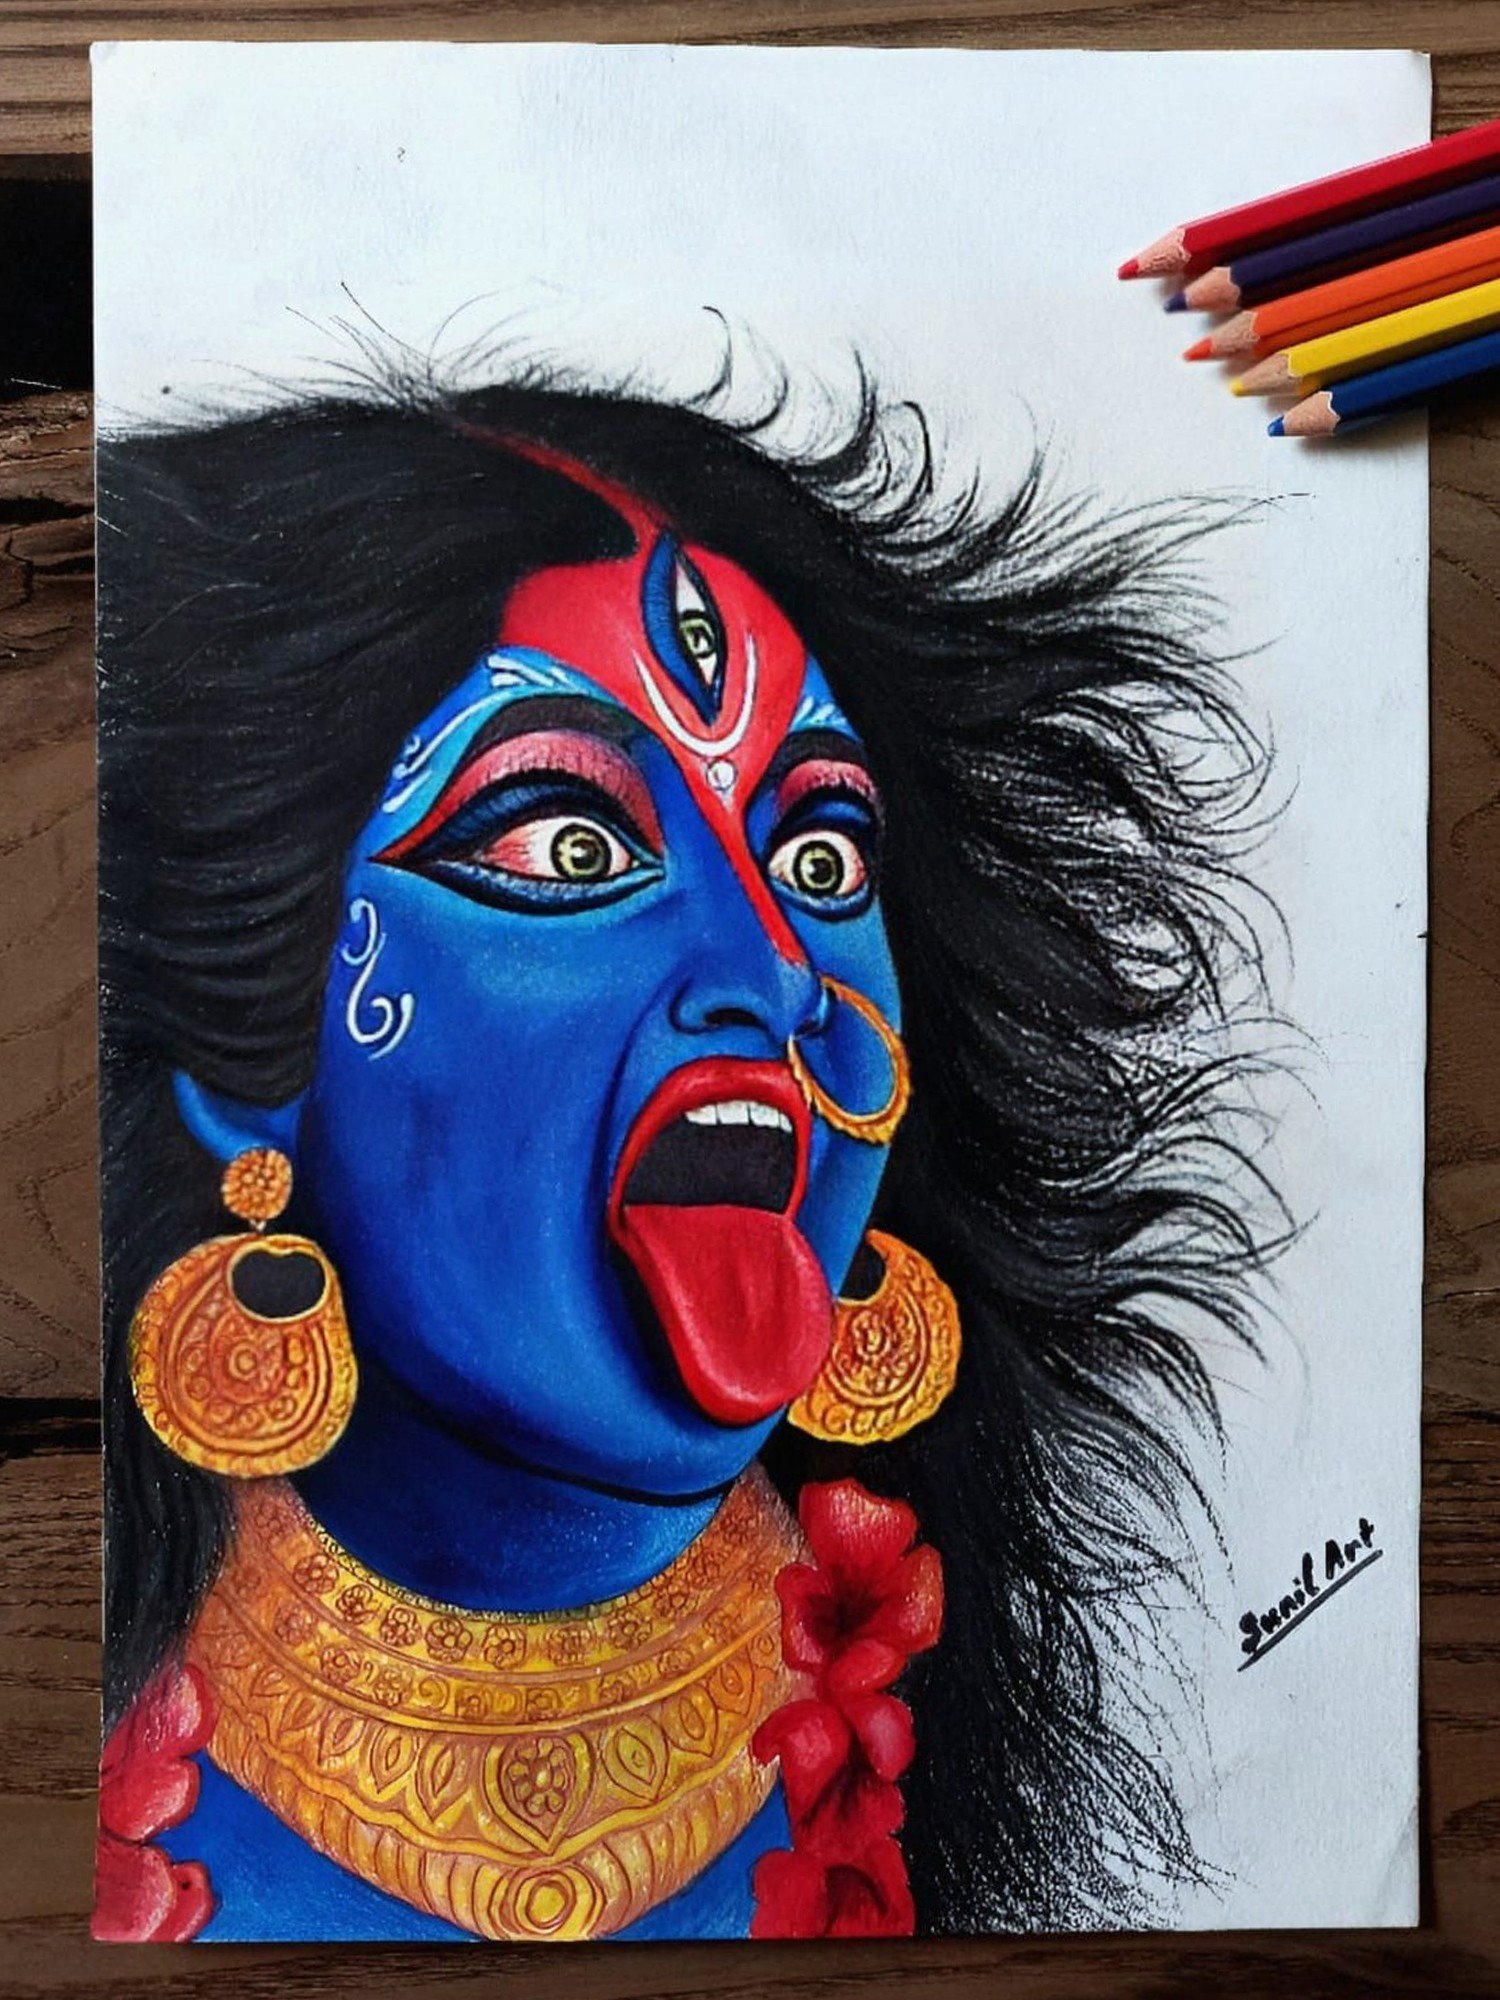 Essence of Kali & Durga - The Fierce... - Goddess Kali Maa | Facebook